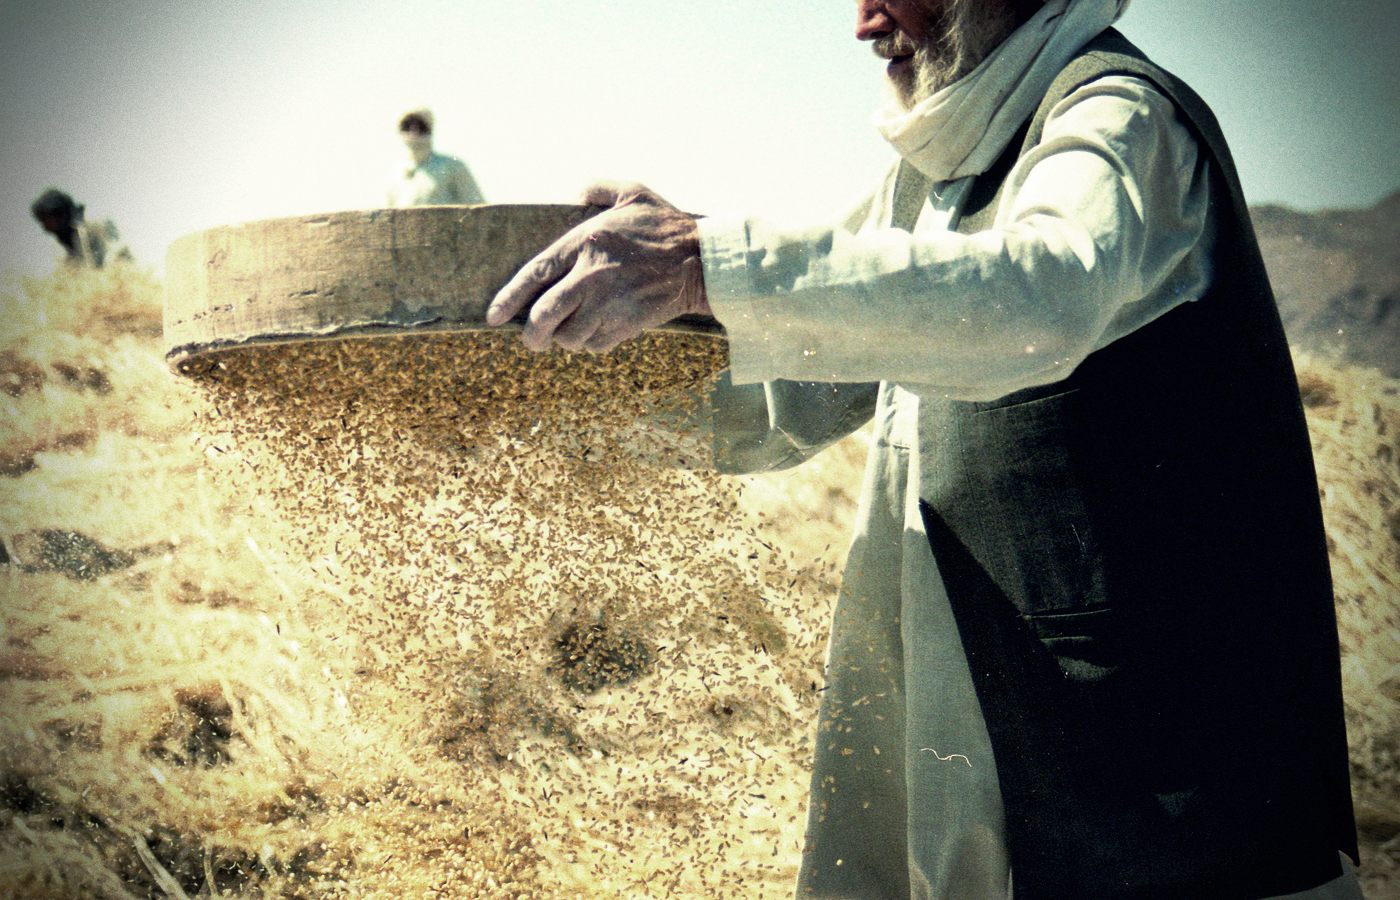 sifting wheat